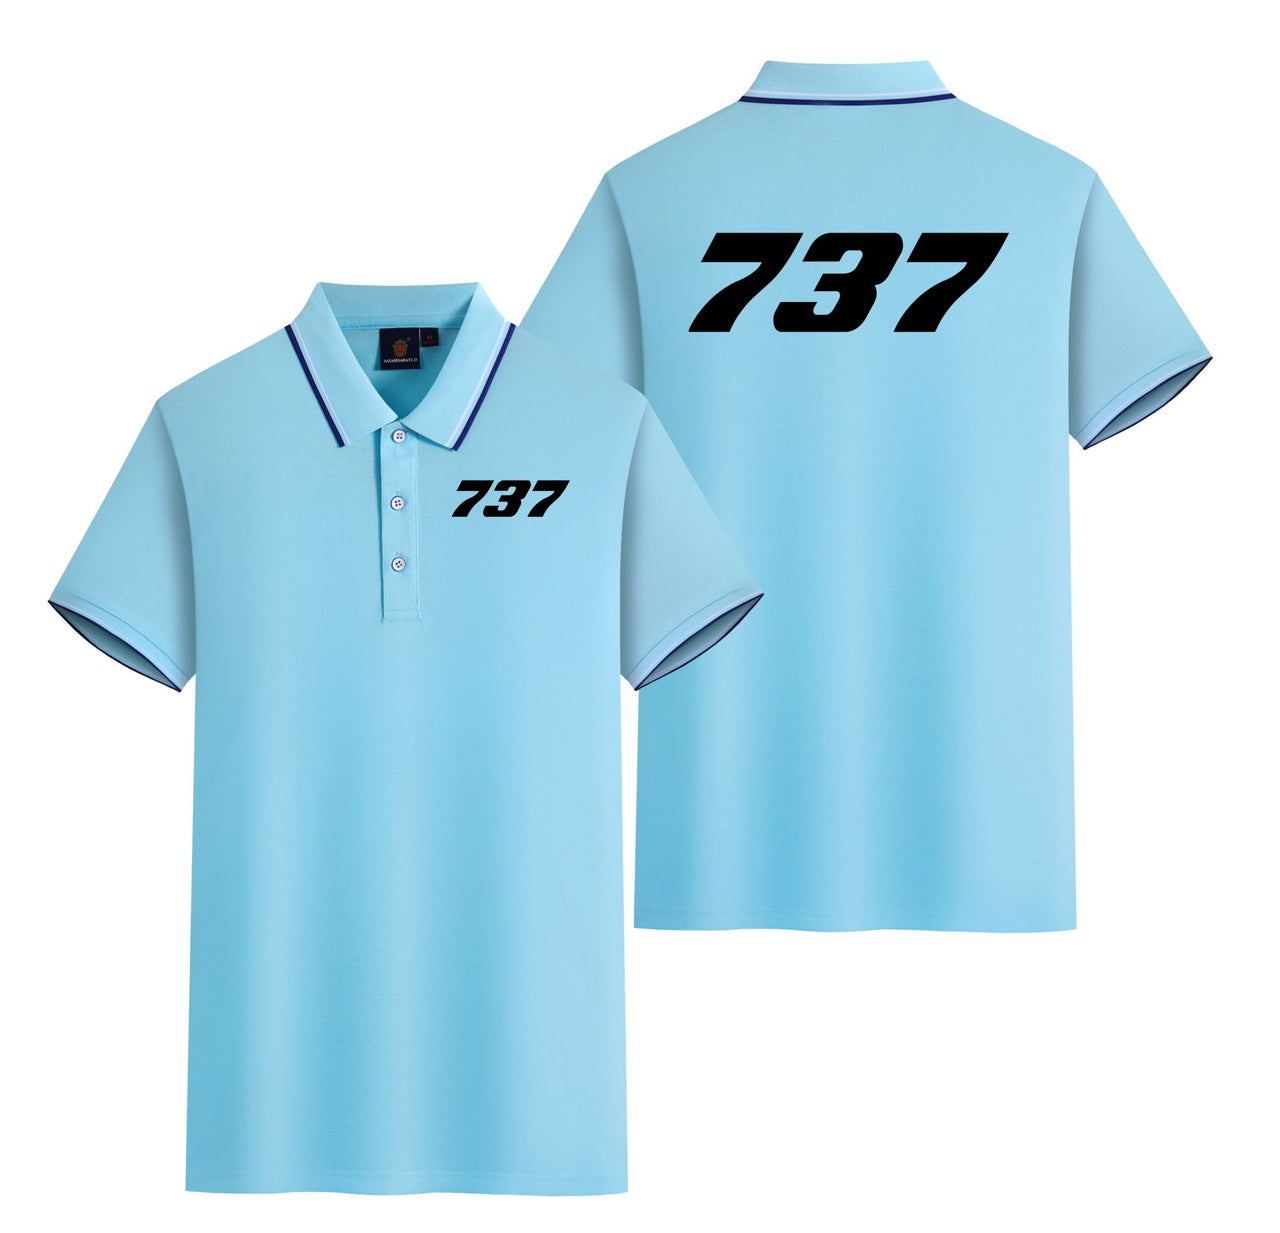 737 Flat Text Designed Stylish Polo T-Shirts (Double-Side)